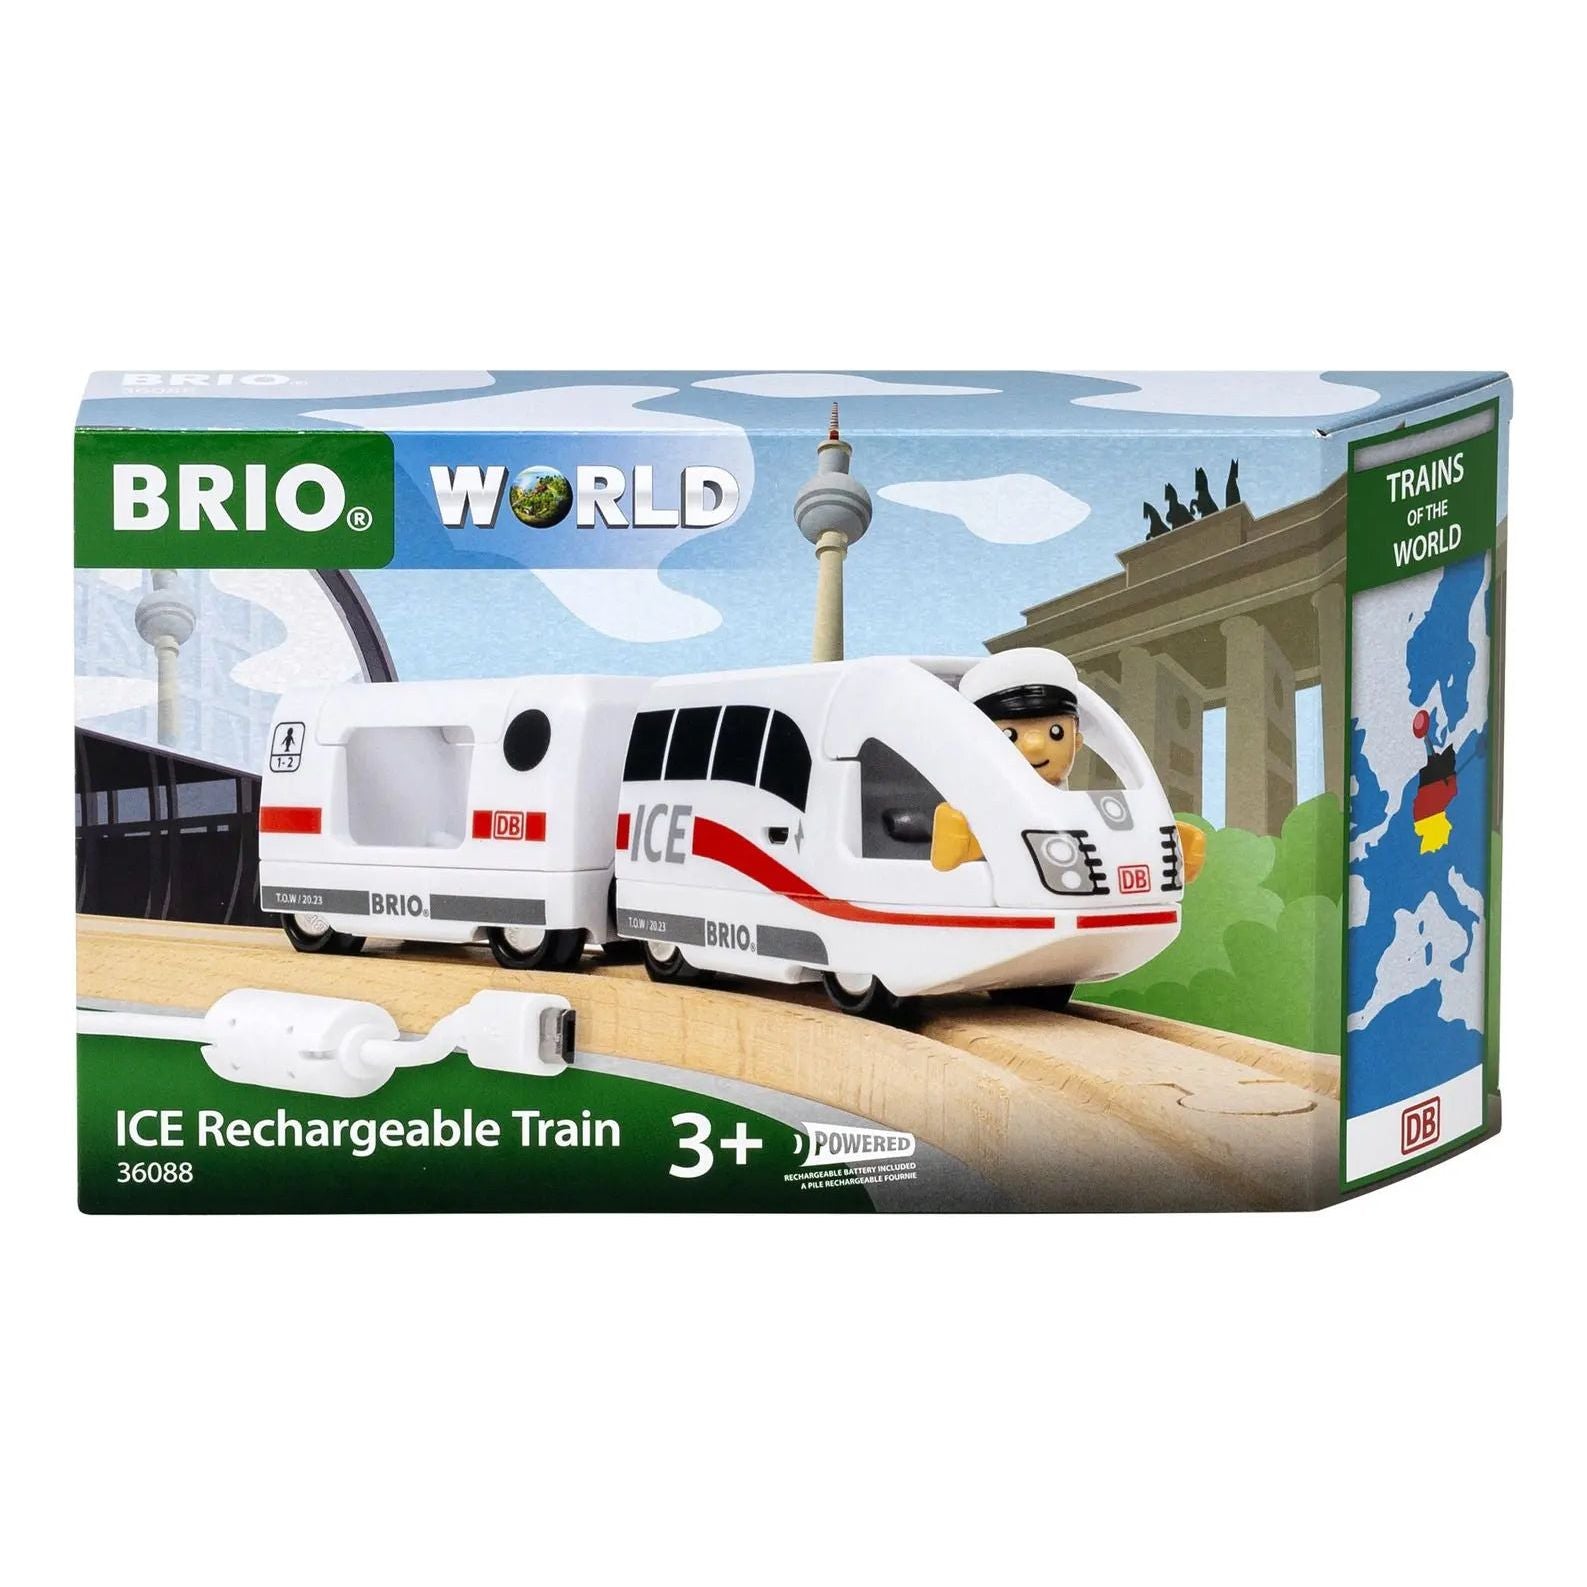 Brio Trains of the World ICE Rechargeable Train BRIO